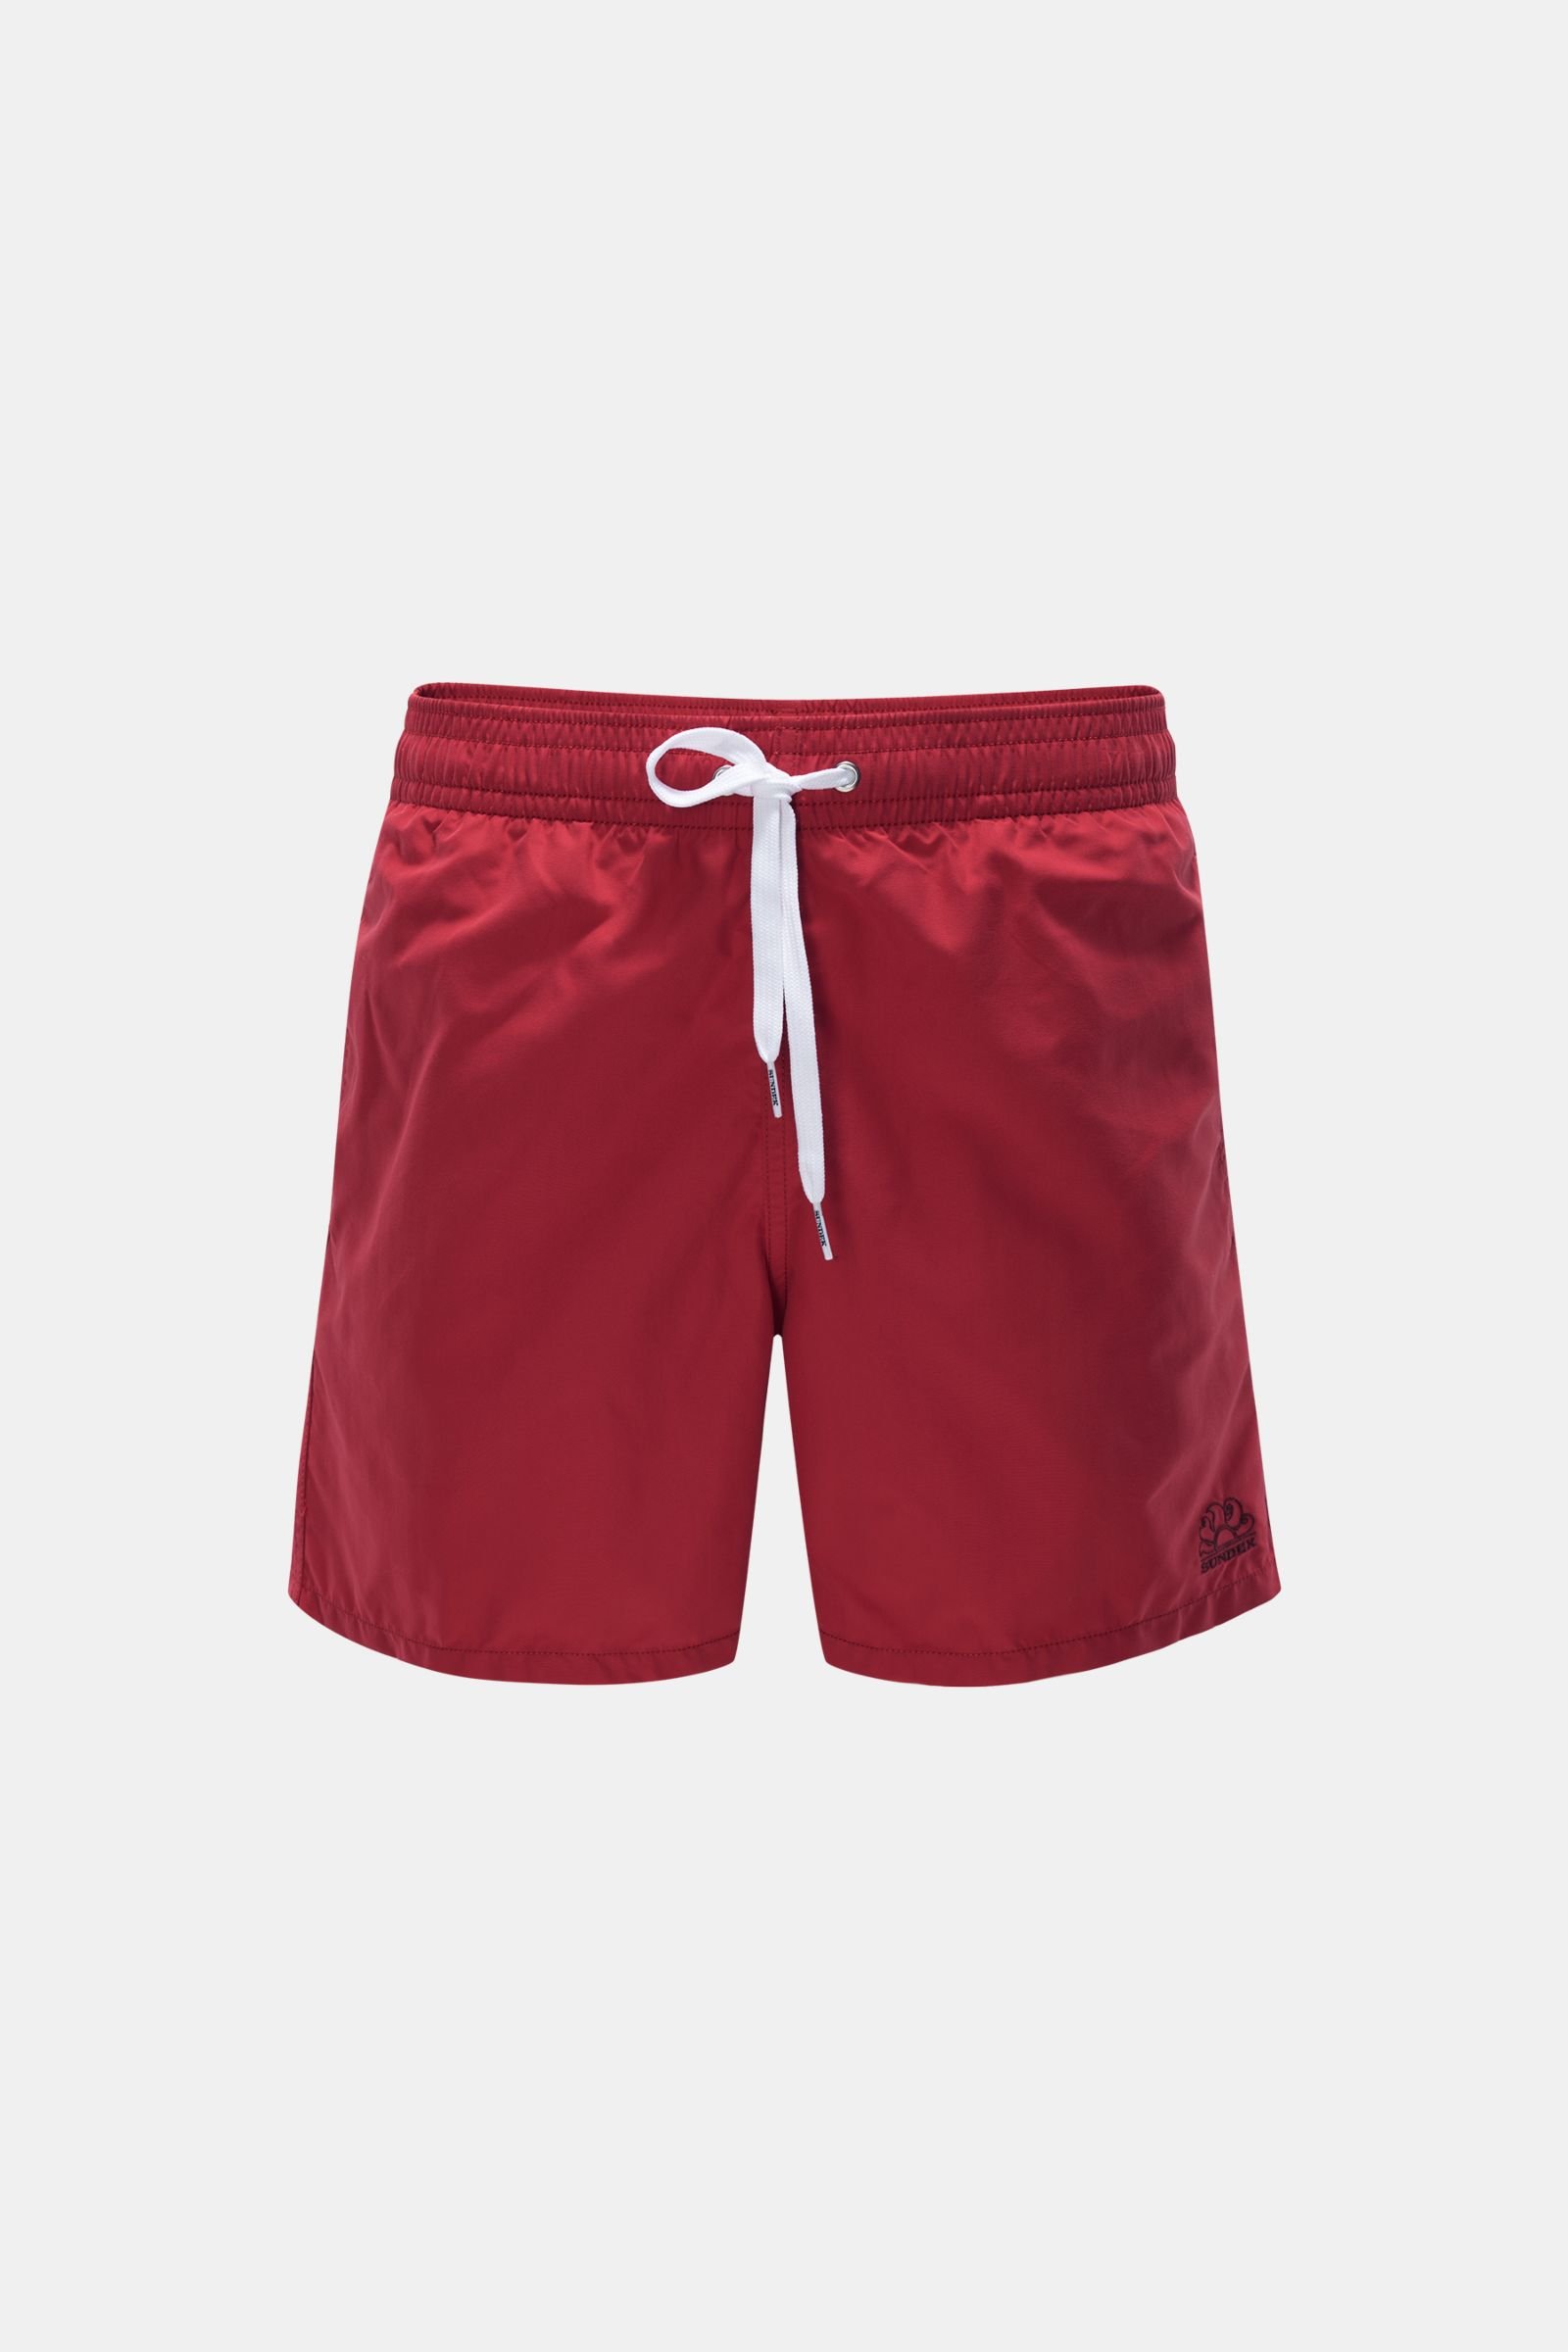 Swim shorts red